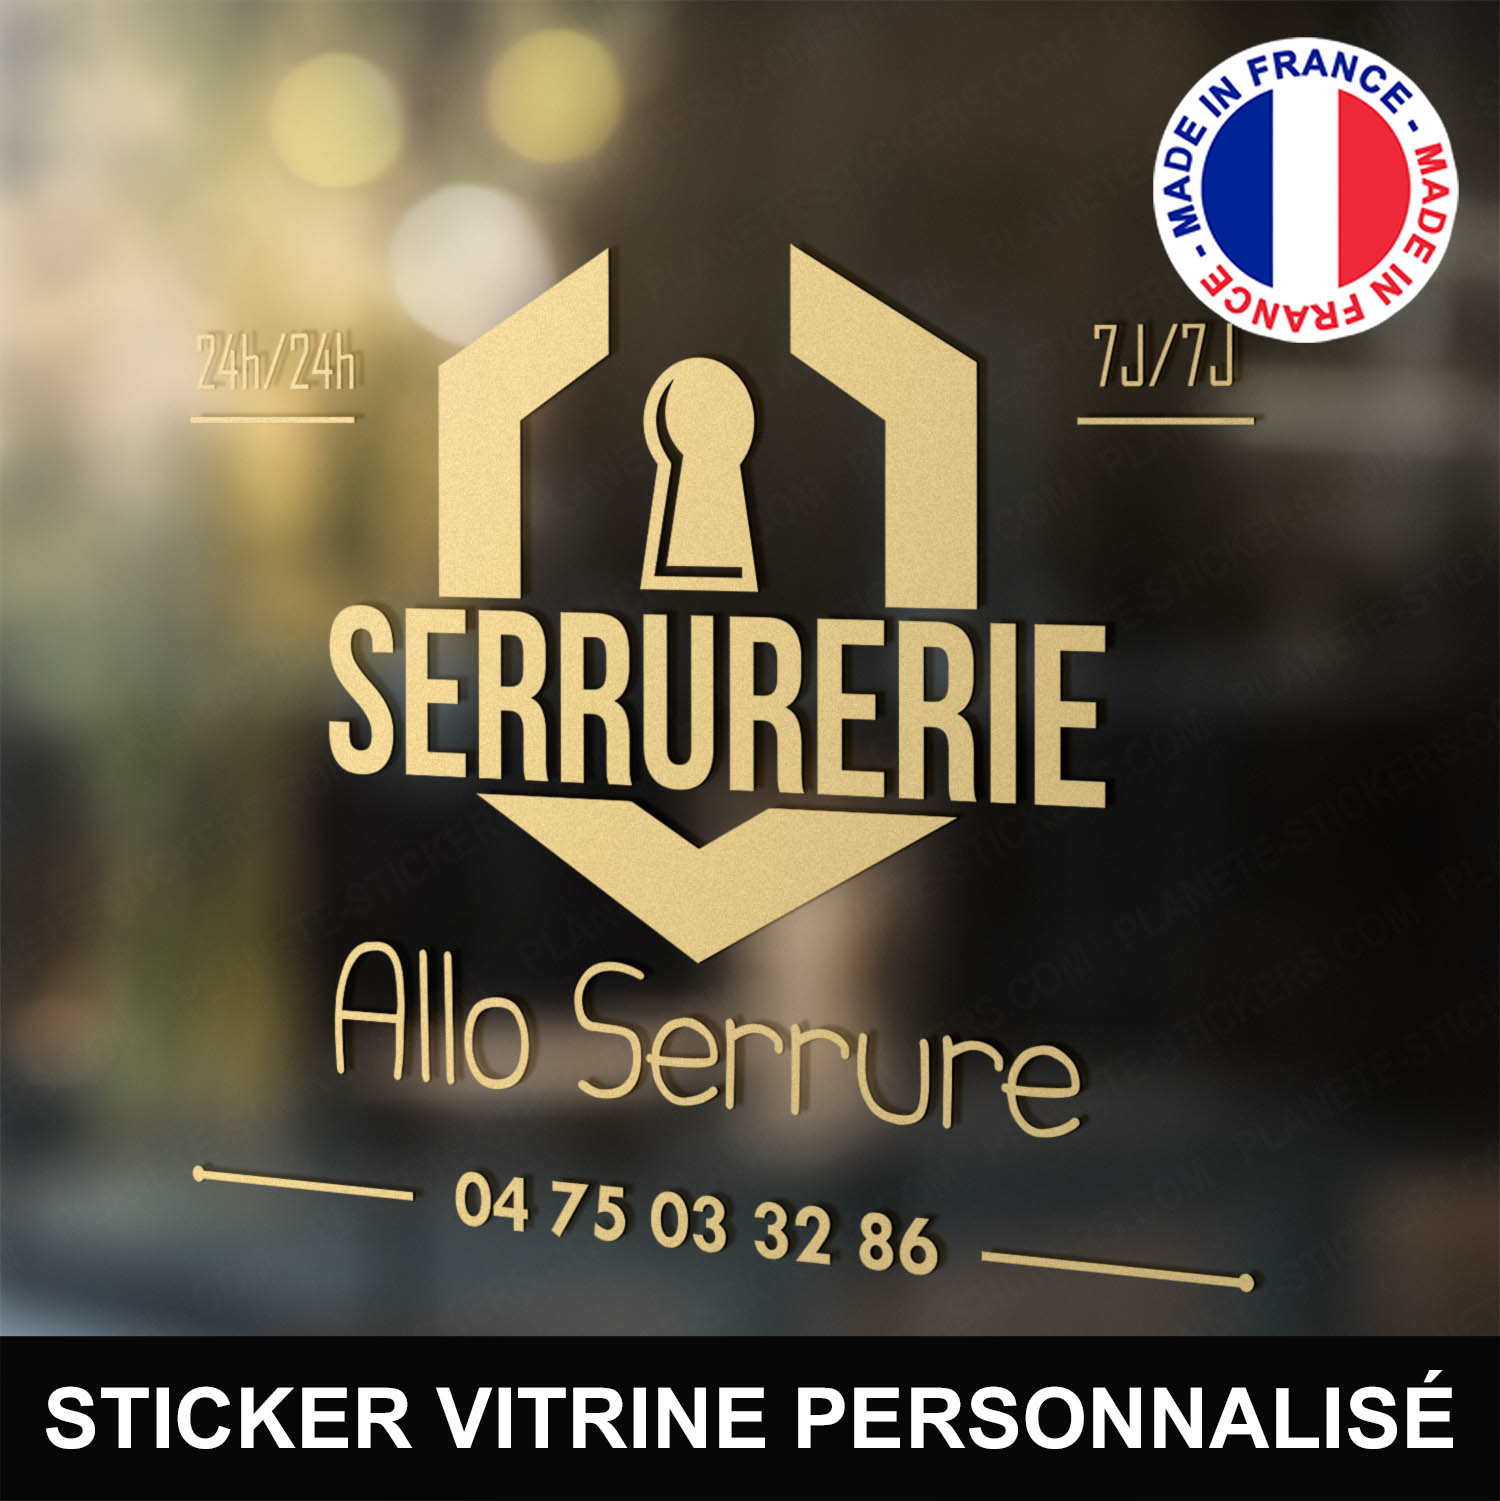 ref3serruriervitrine-stickers-commerce-serrurerie-vitrine-sticker-personnalisé-autocollant-pro-serrure-depannage-clef-professionnel